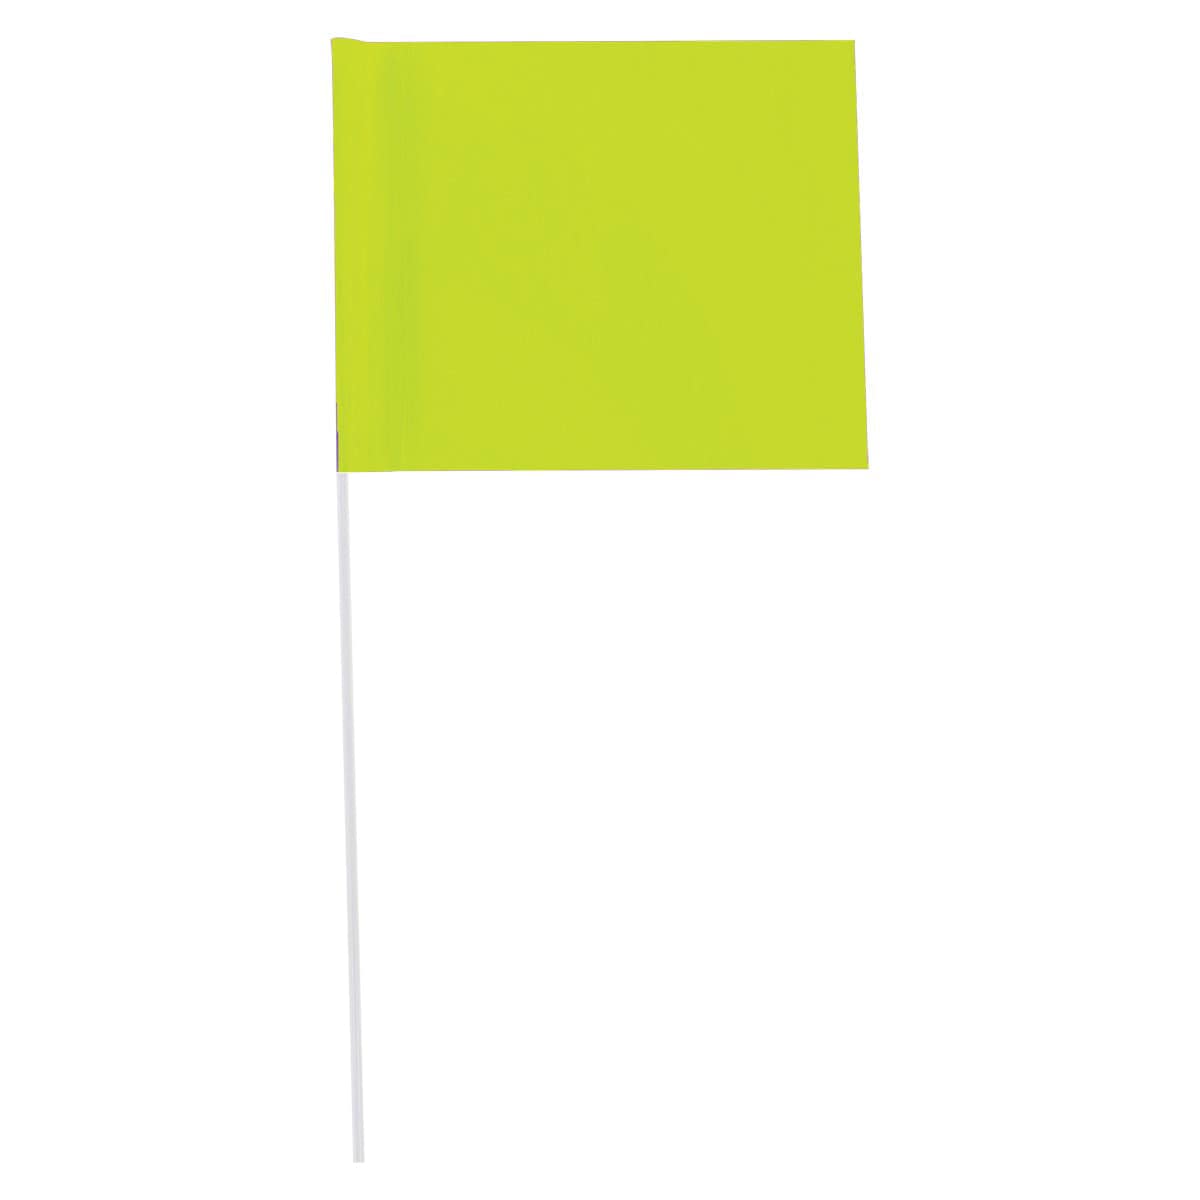 Custom Print Marking Flag, 4"x5", 18" PVC stake, 1000 PK